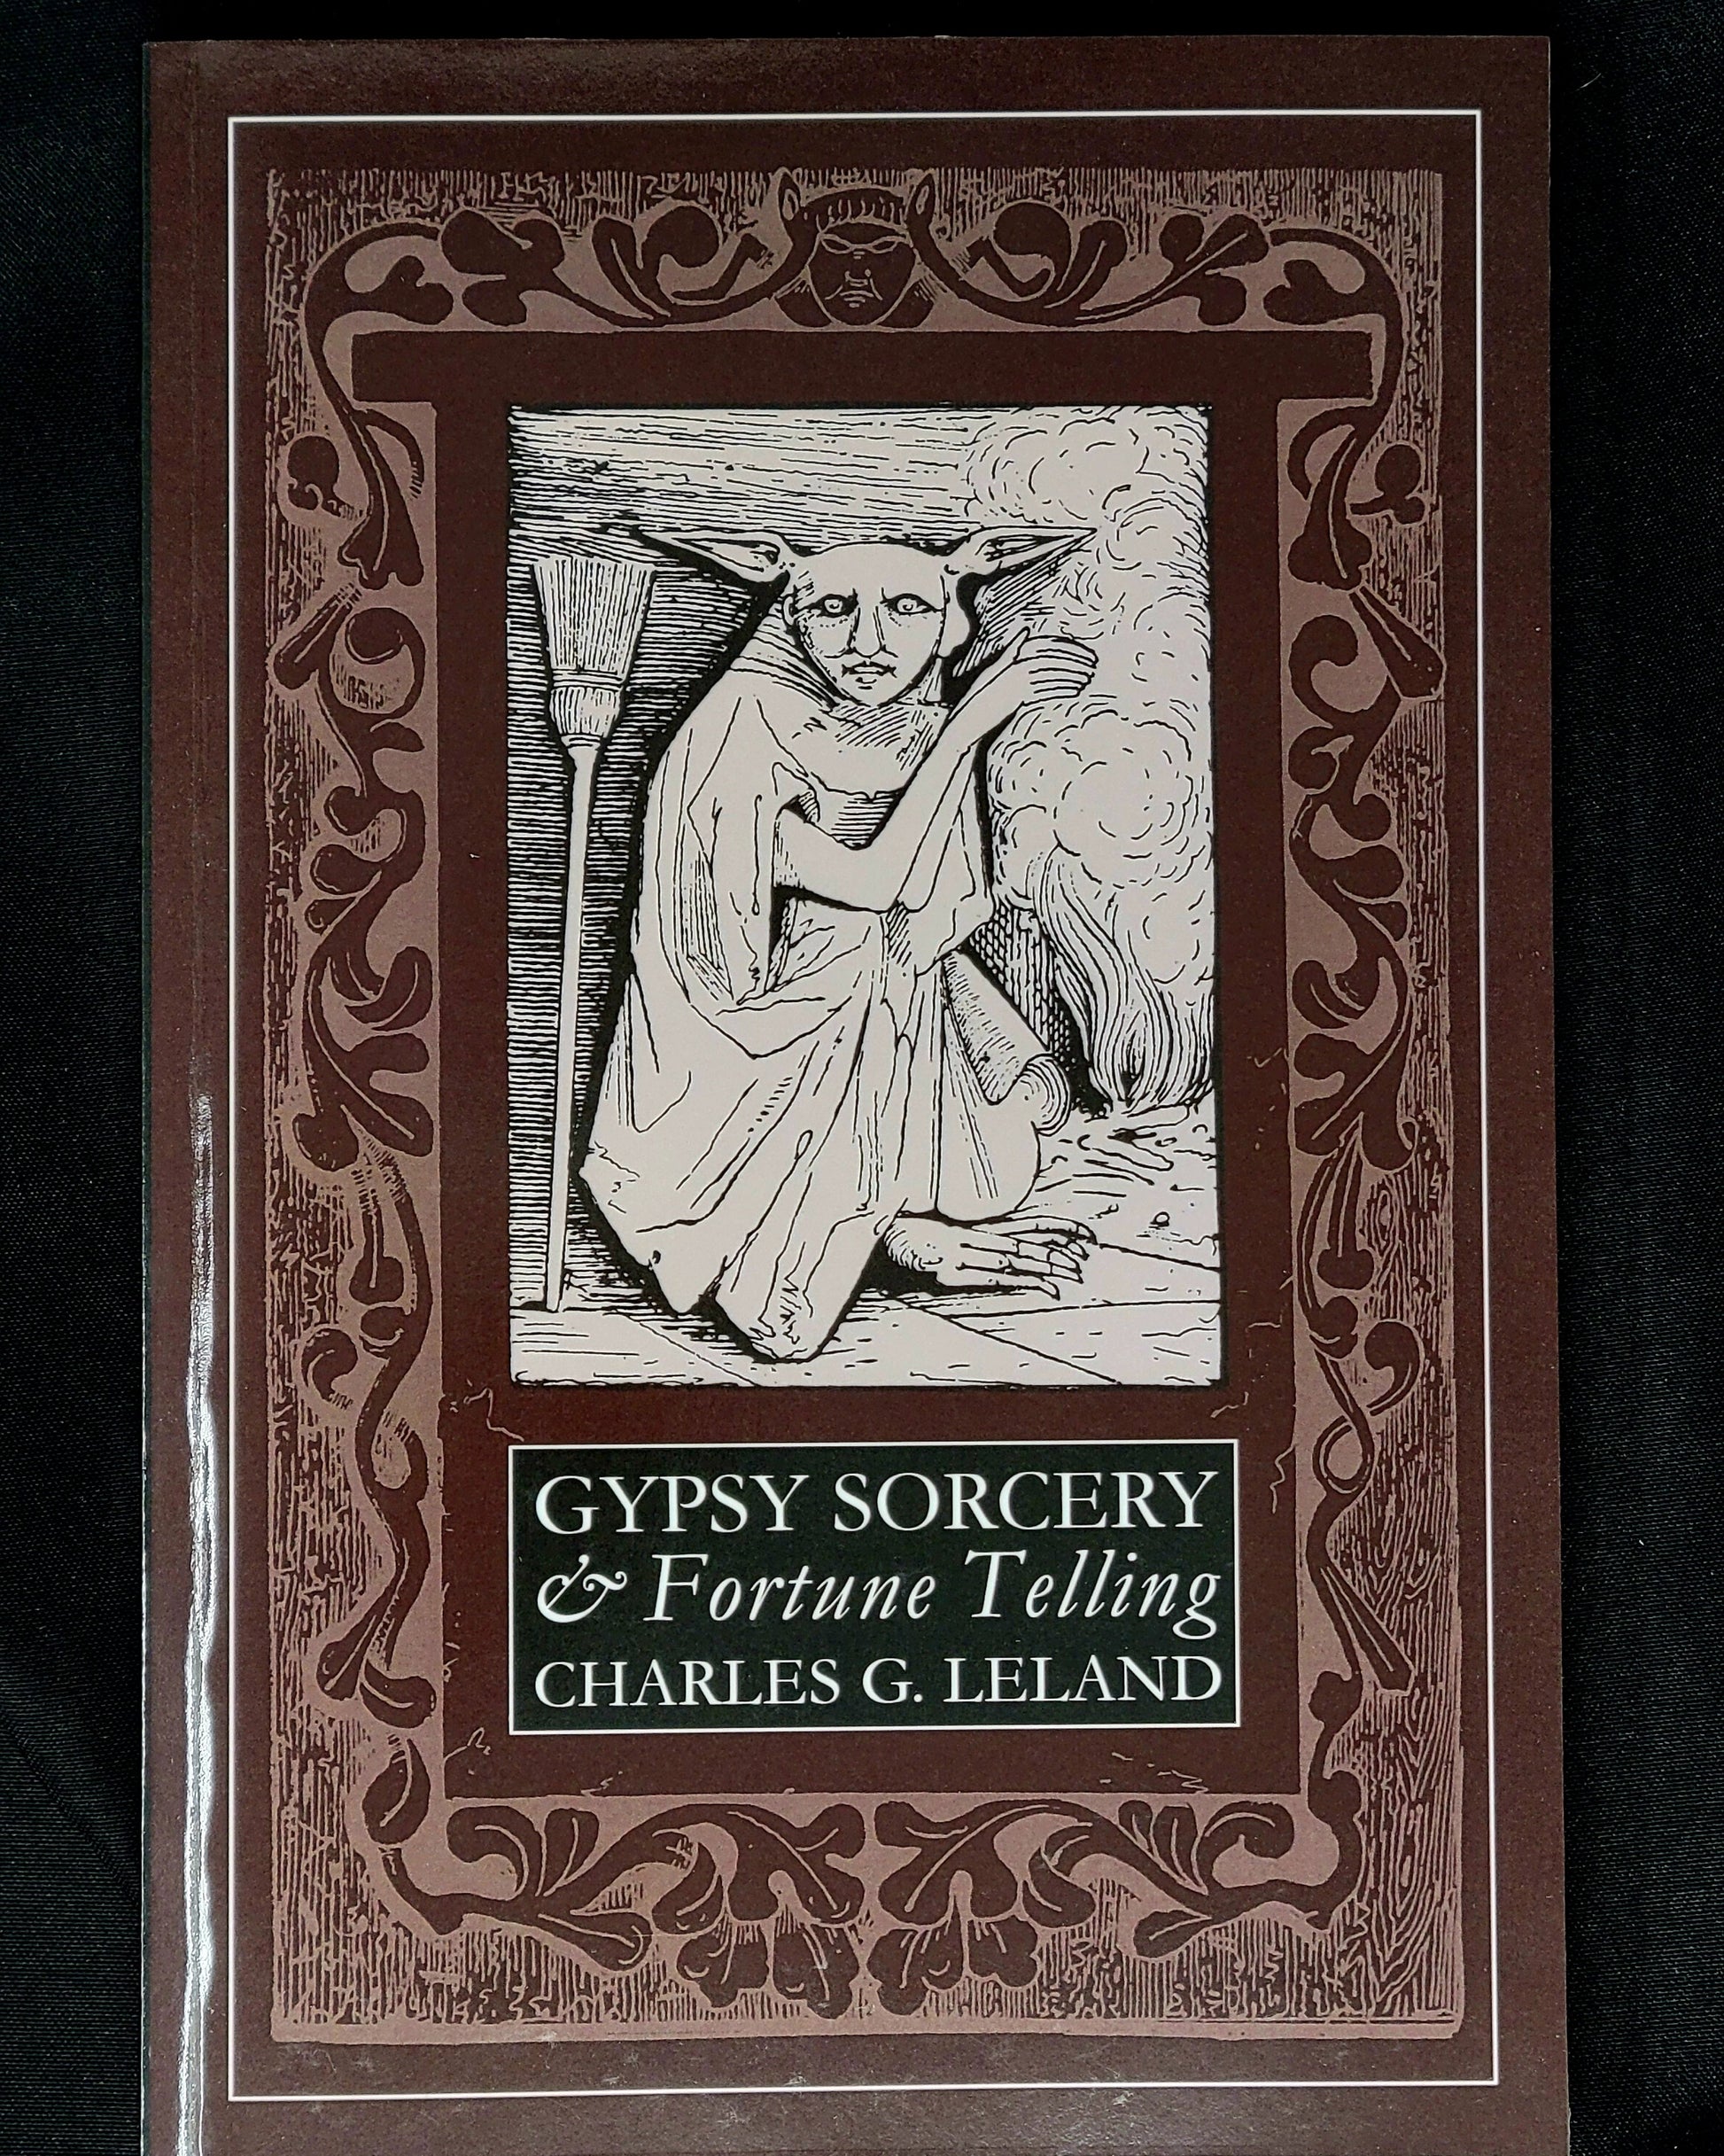 Gypsy Sorcery & Fortune Telling by Charles G. Leland